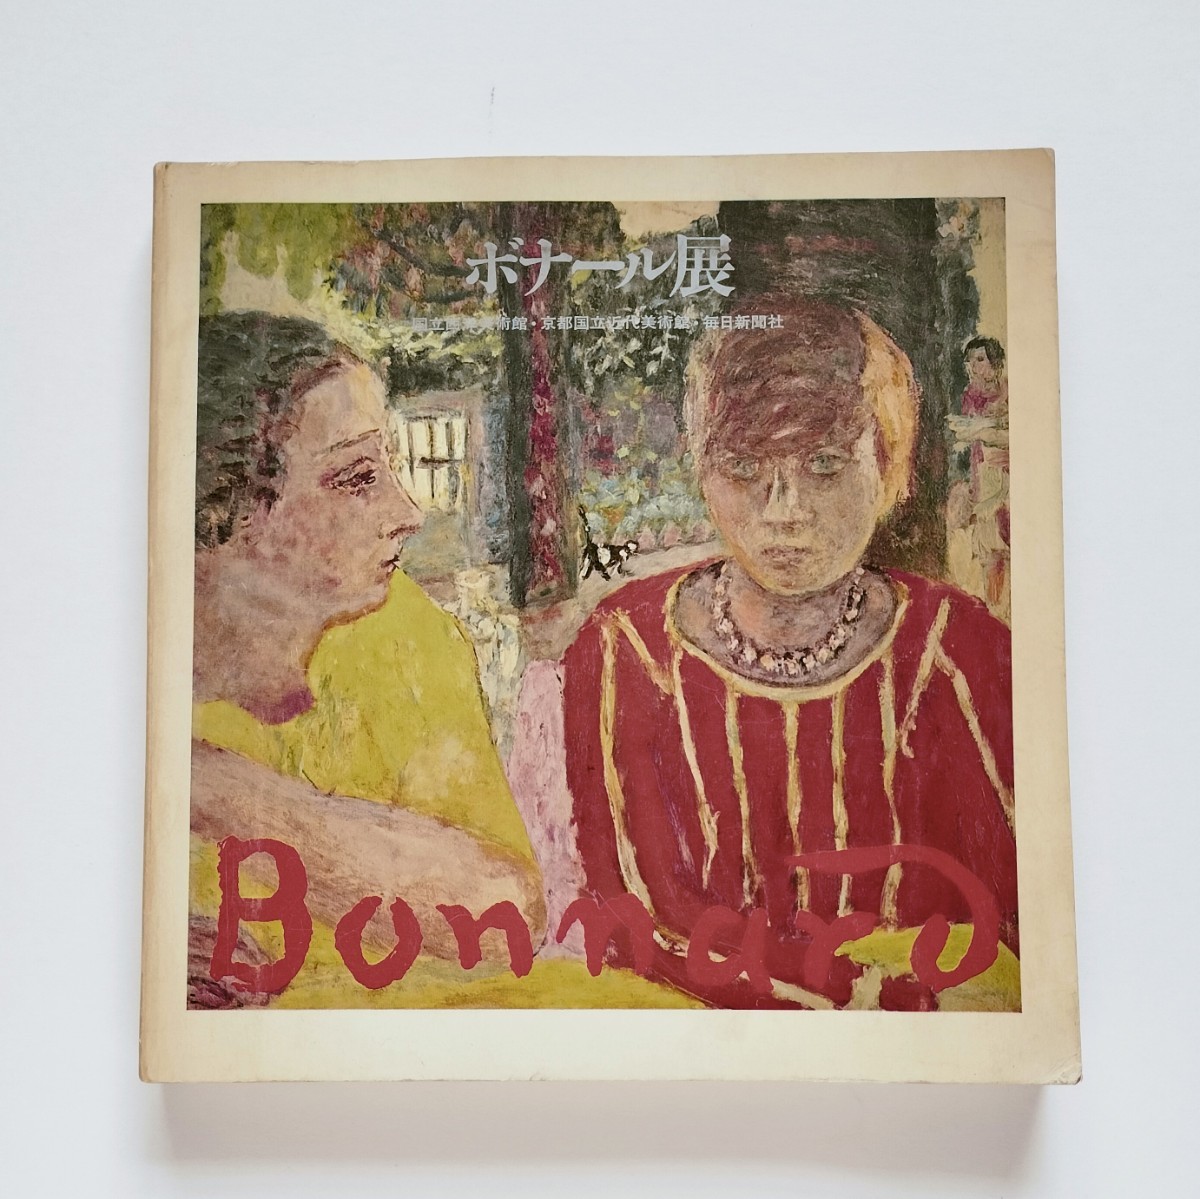 a4. Bonnard-Ausstellung zum 100. Jahrestag [Katalog] 1968, Malerei, Kunstbuch, Sammlung, Katalog